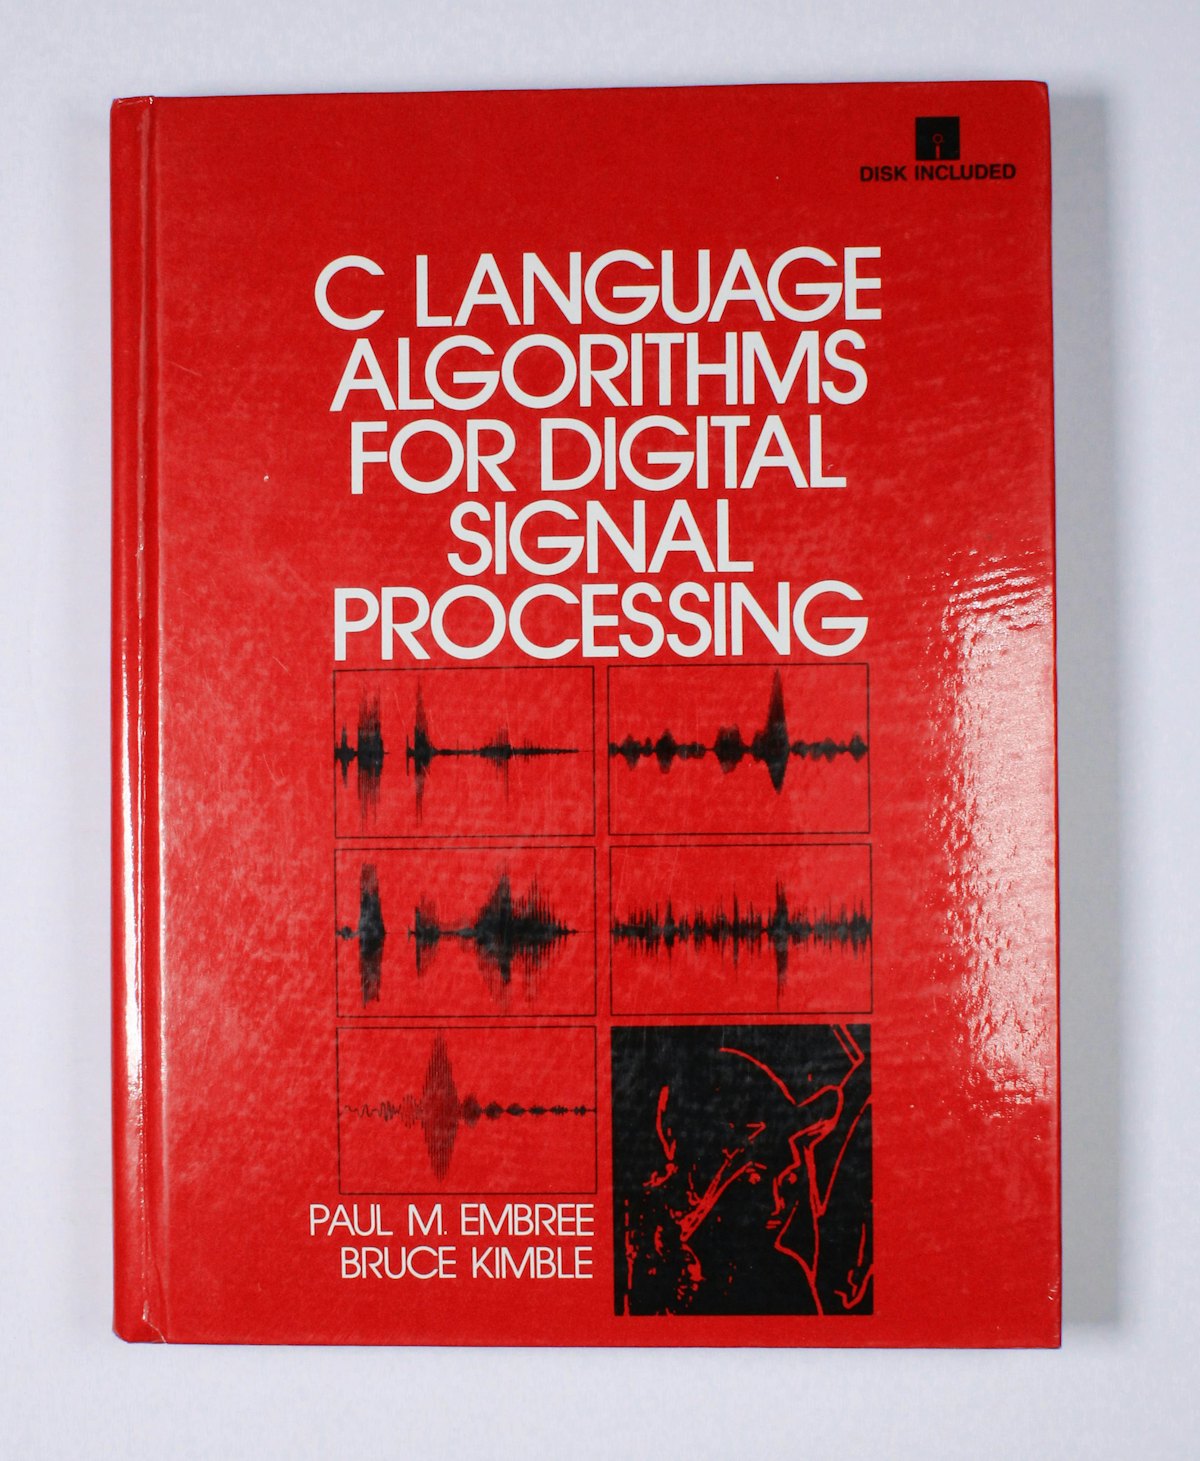 C Language Algorithms for Digital Signal Processing